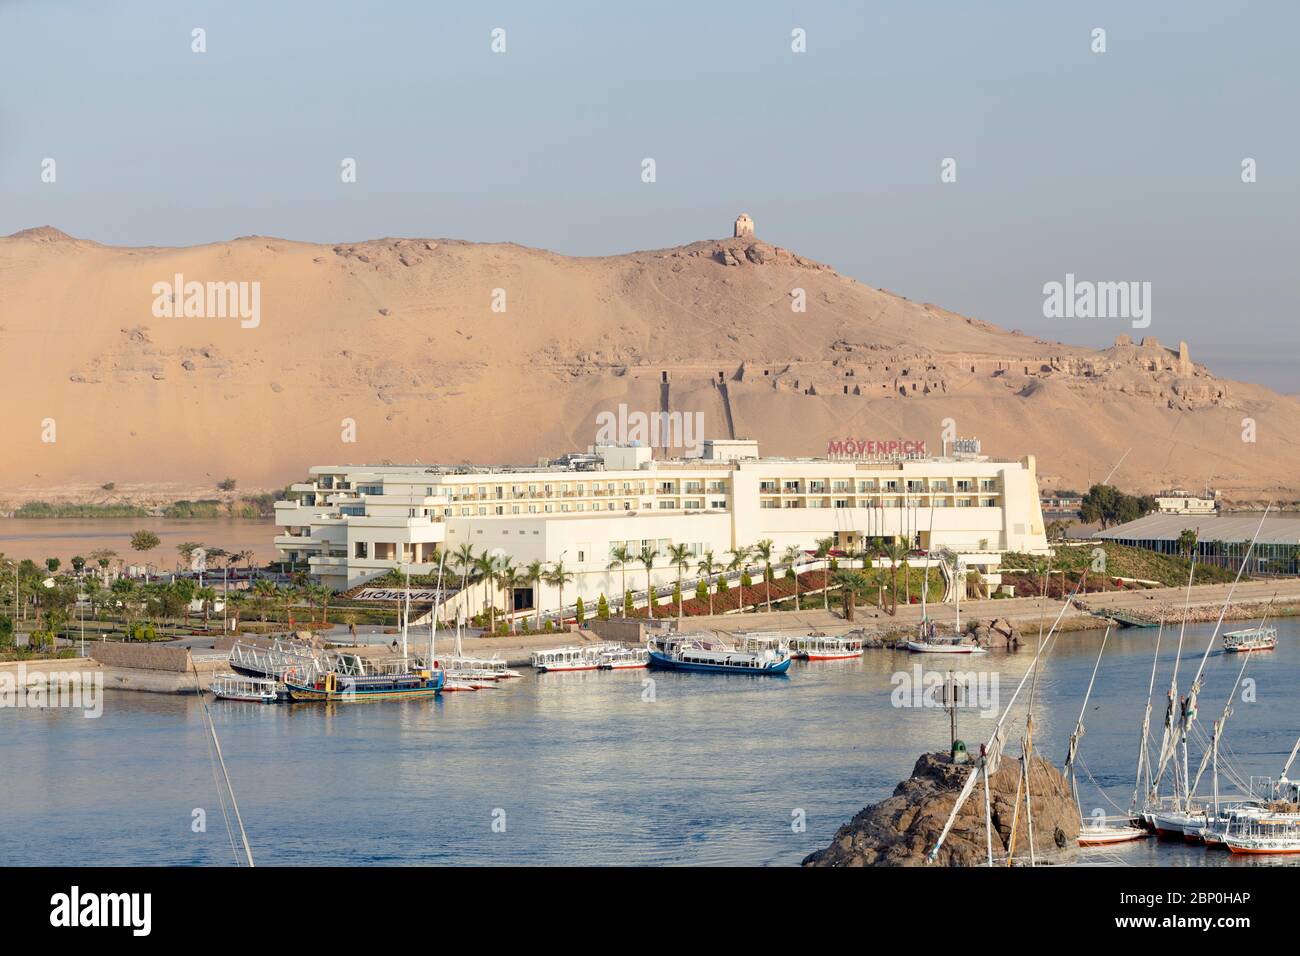 Mövenpick hotel and resort, Elephantine island, Aswan, Egypt Stock Photo